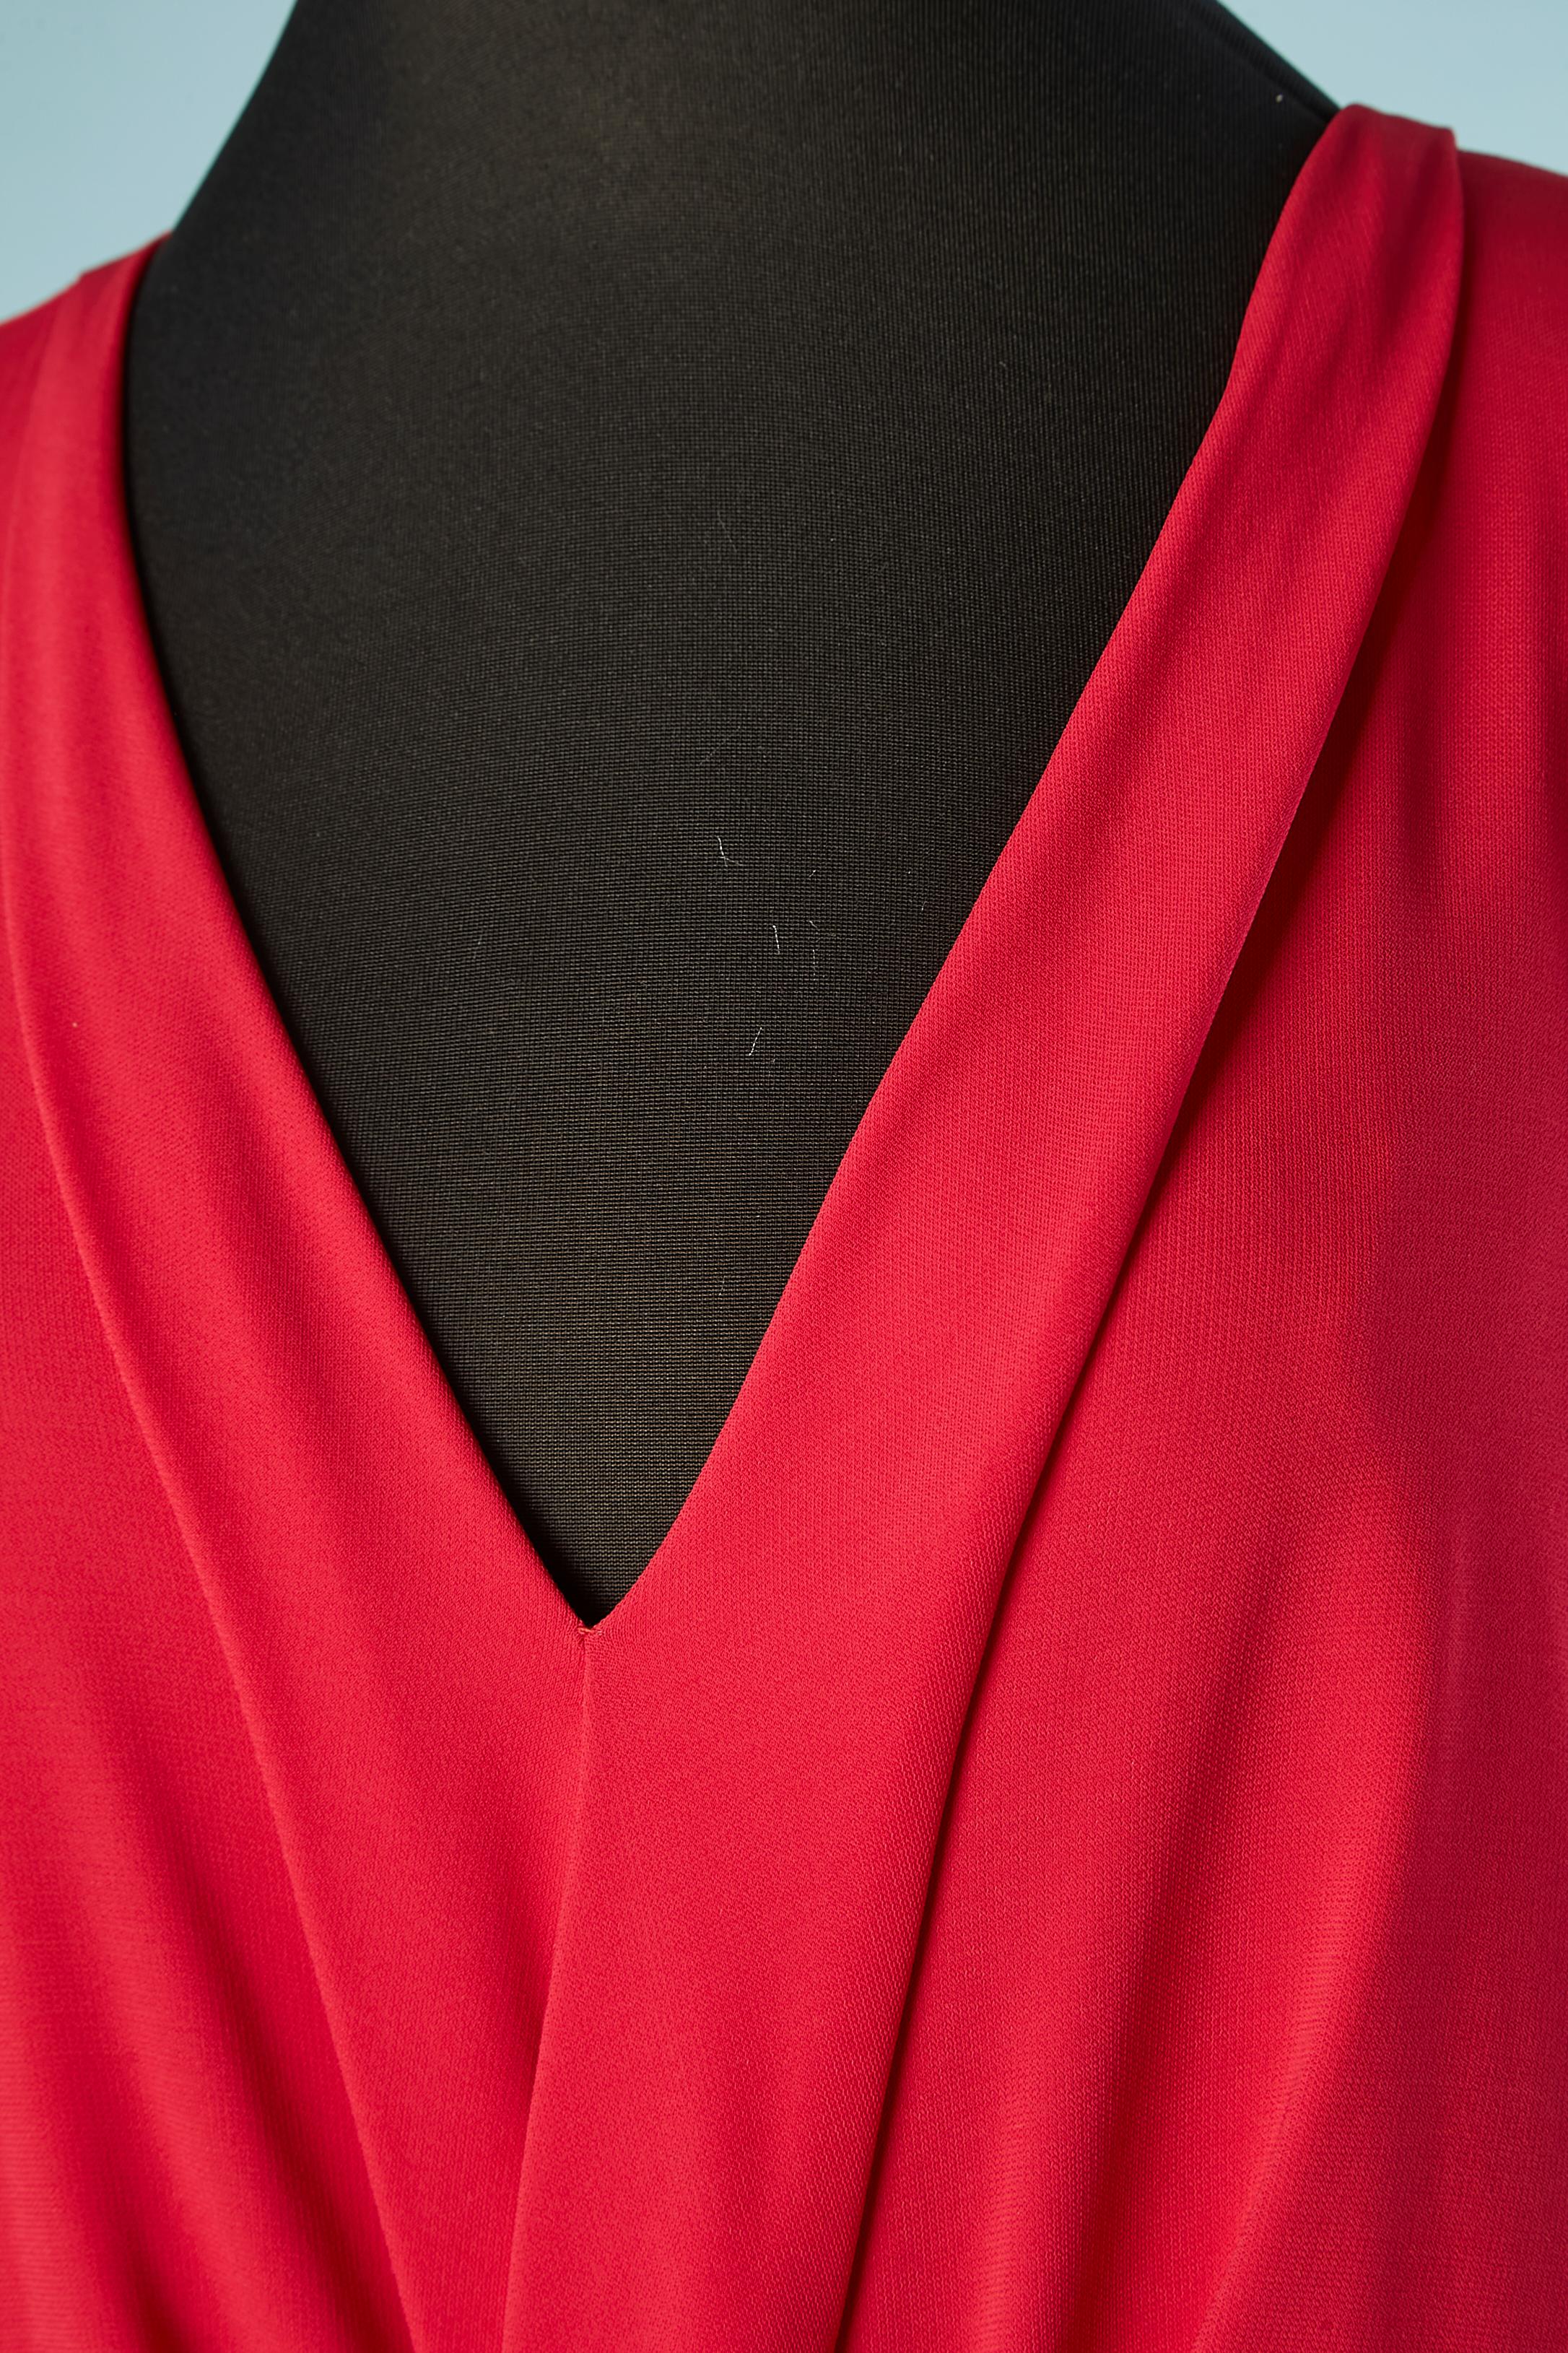 Red jersey cocktail dress draped in the front Lanvin par Alber Elbaz FW 2015 In Excellent Condition For Sale In Saint-Ouen-Sur-Seine, FR